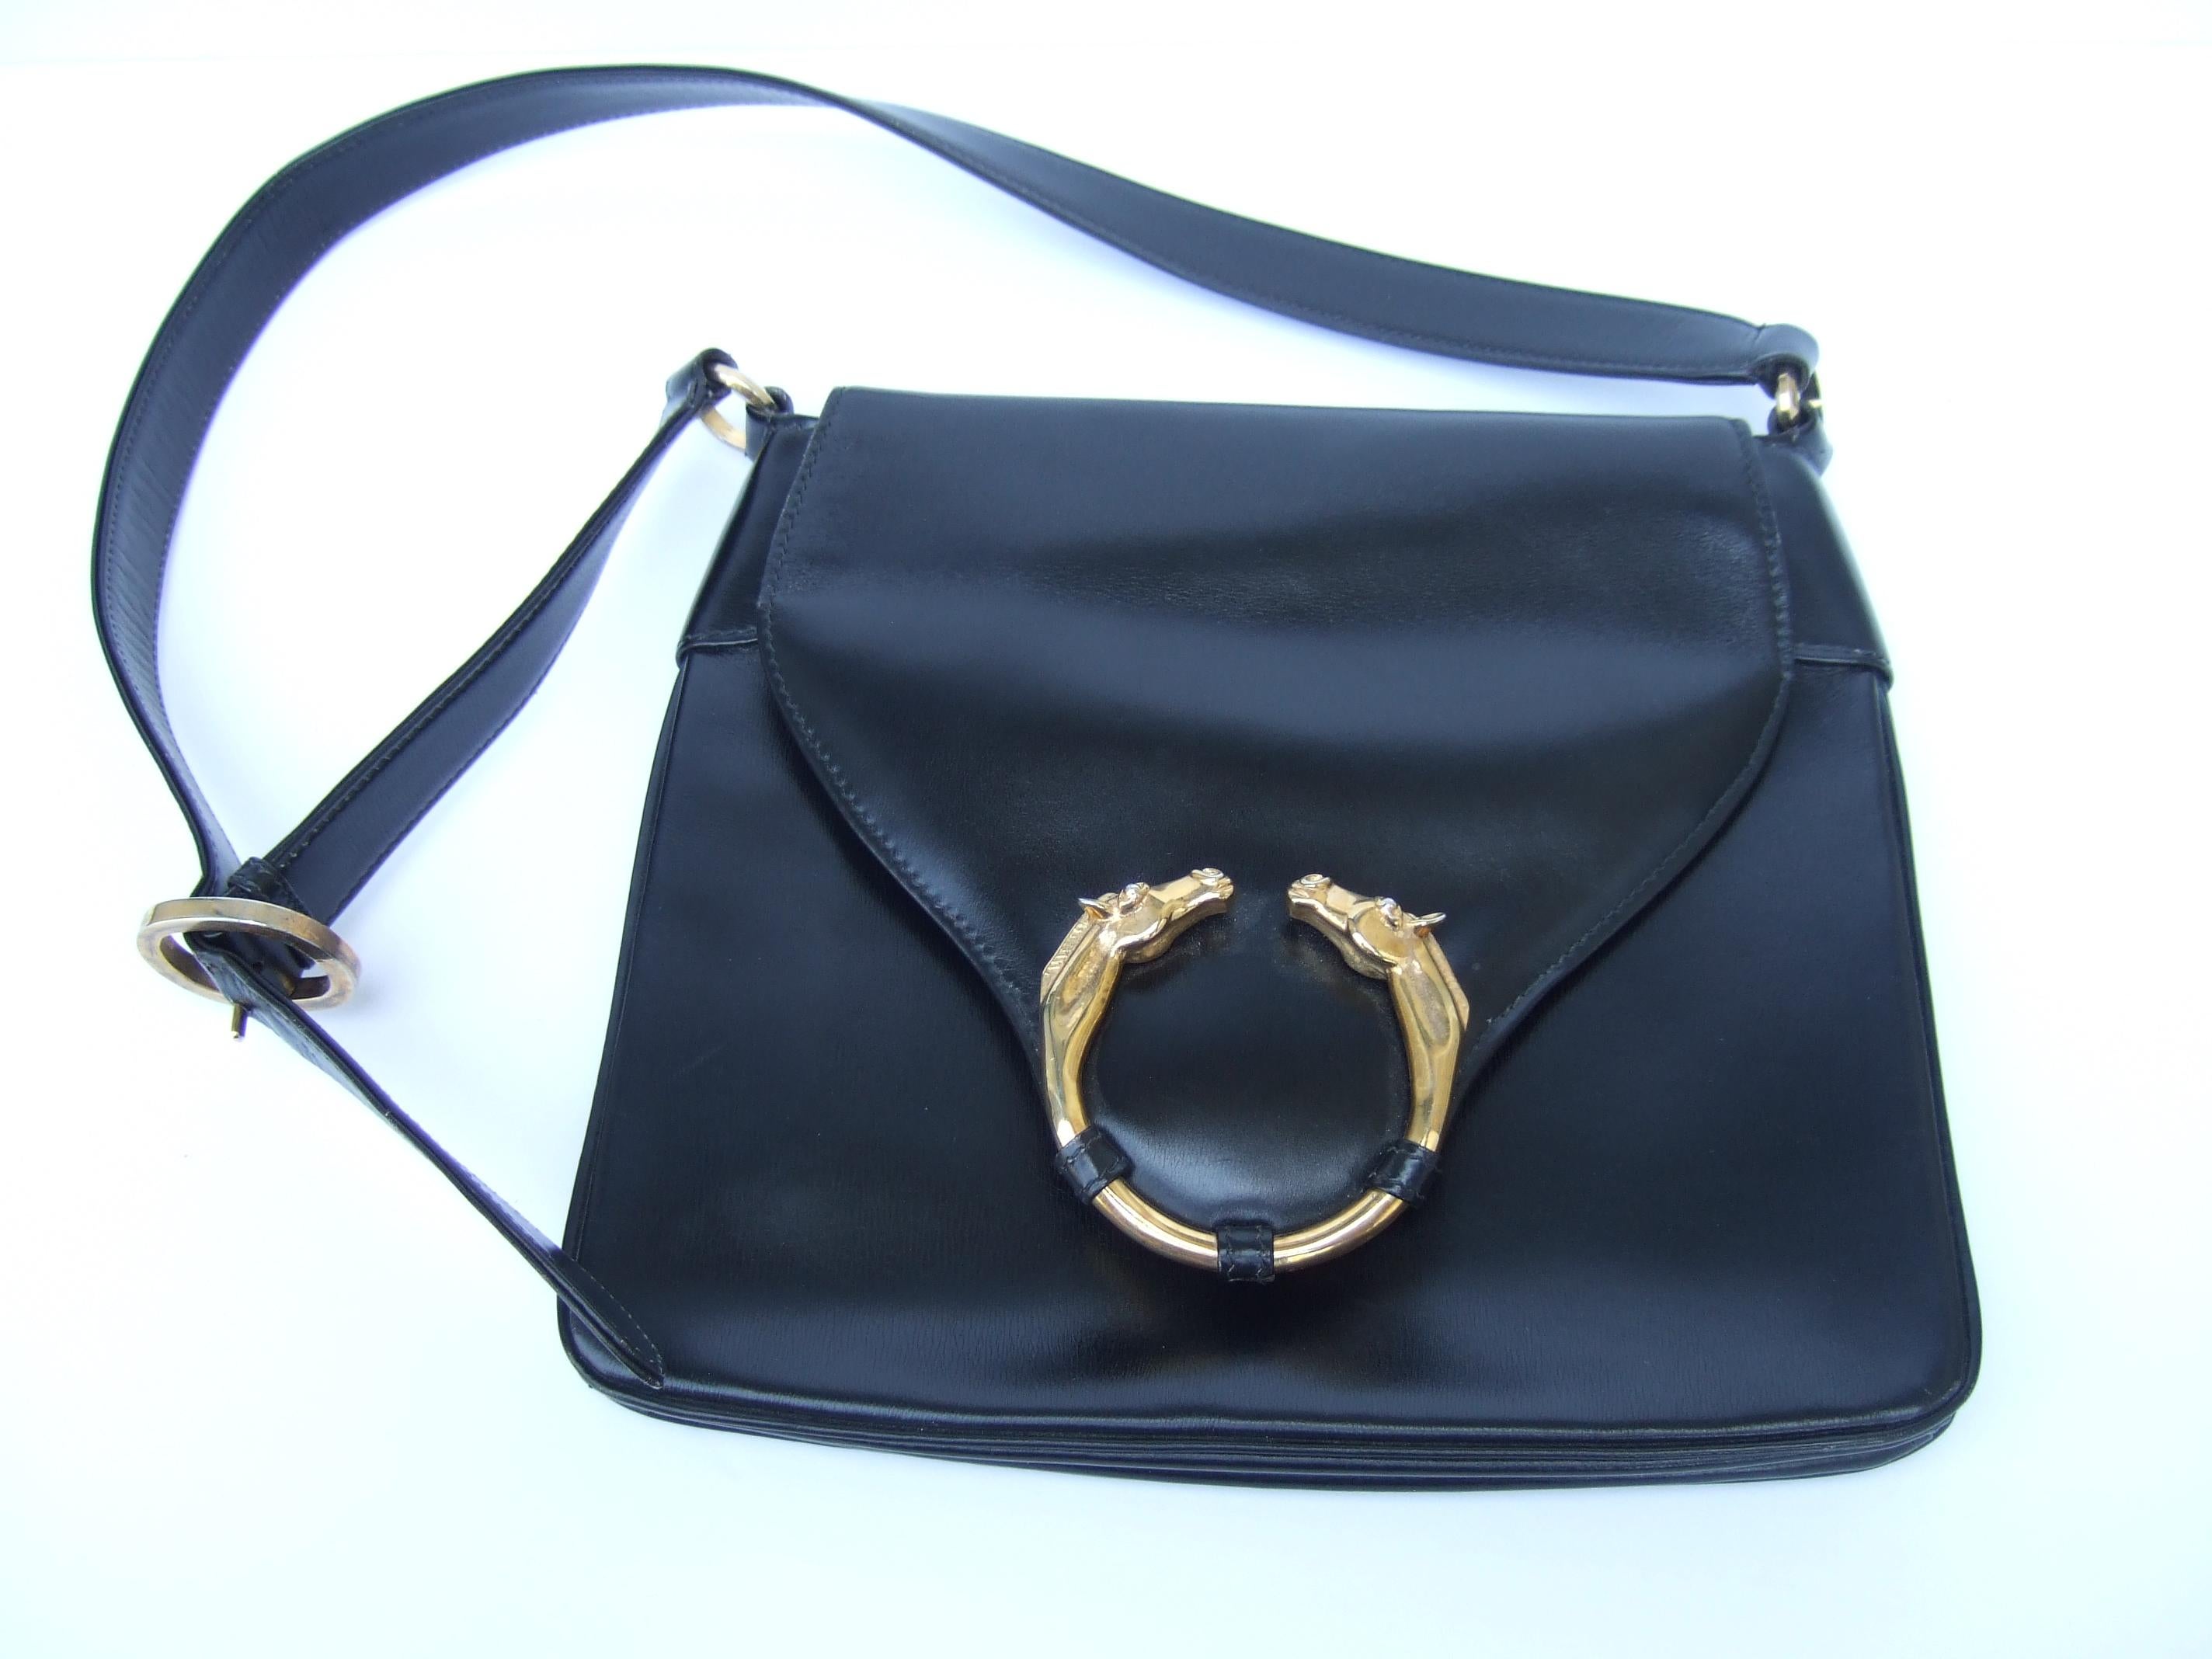 GUCCI Extremely Rare Ebony Leather Equestrian Emblem Handbag c 1970s For Sale 2